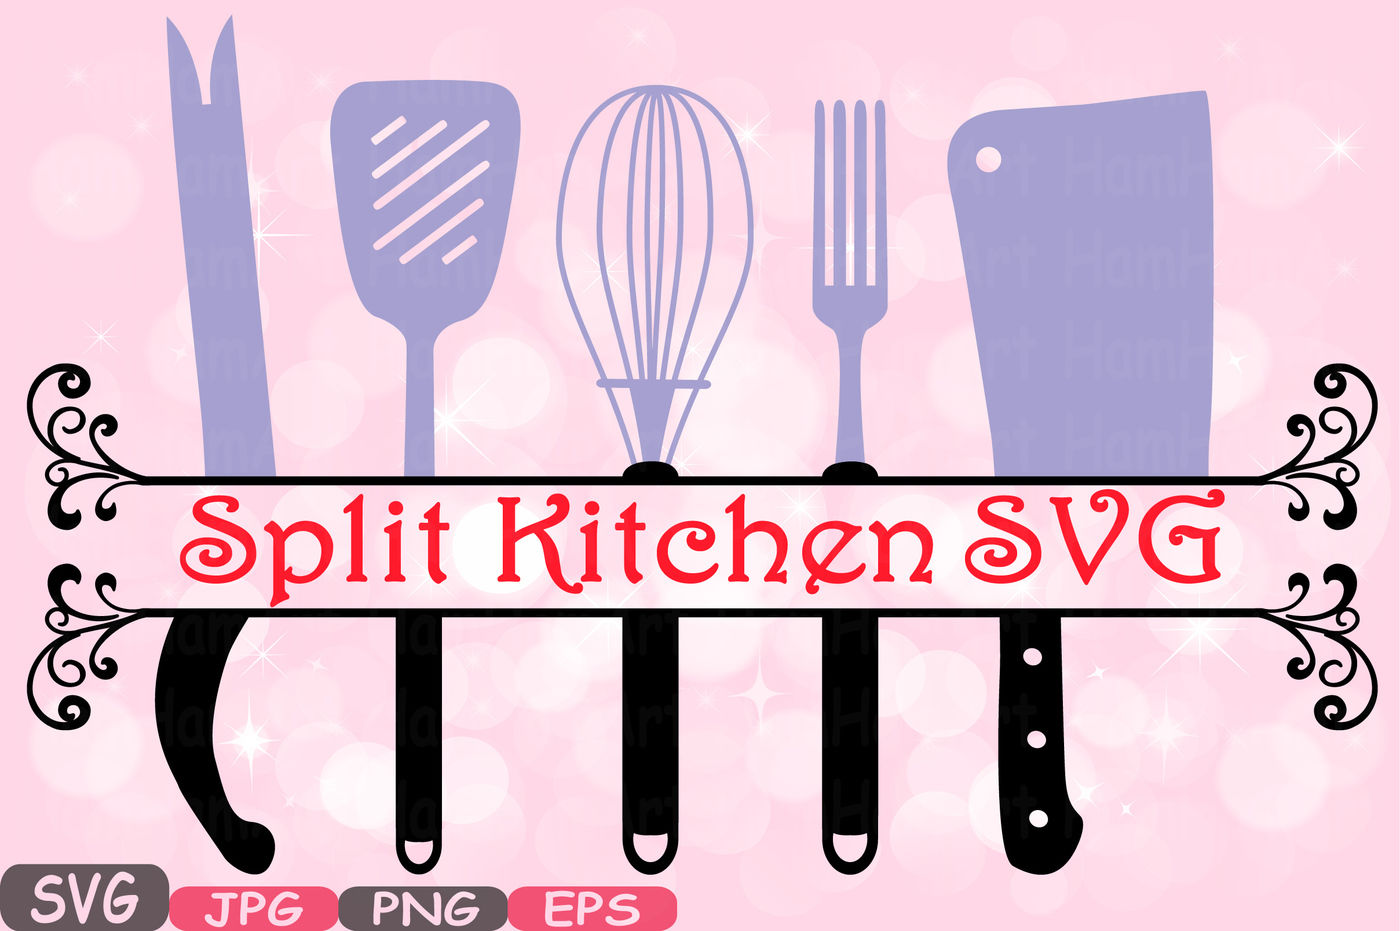 free svg files split kitchen utensils to download